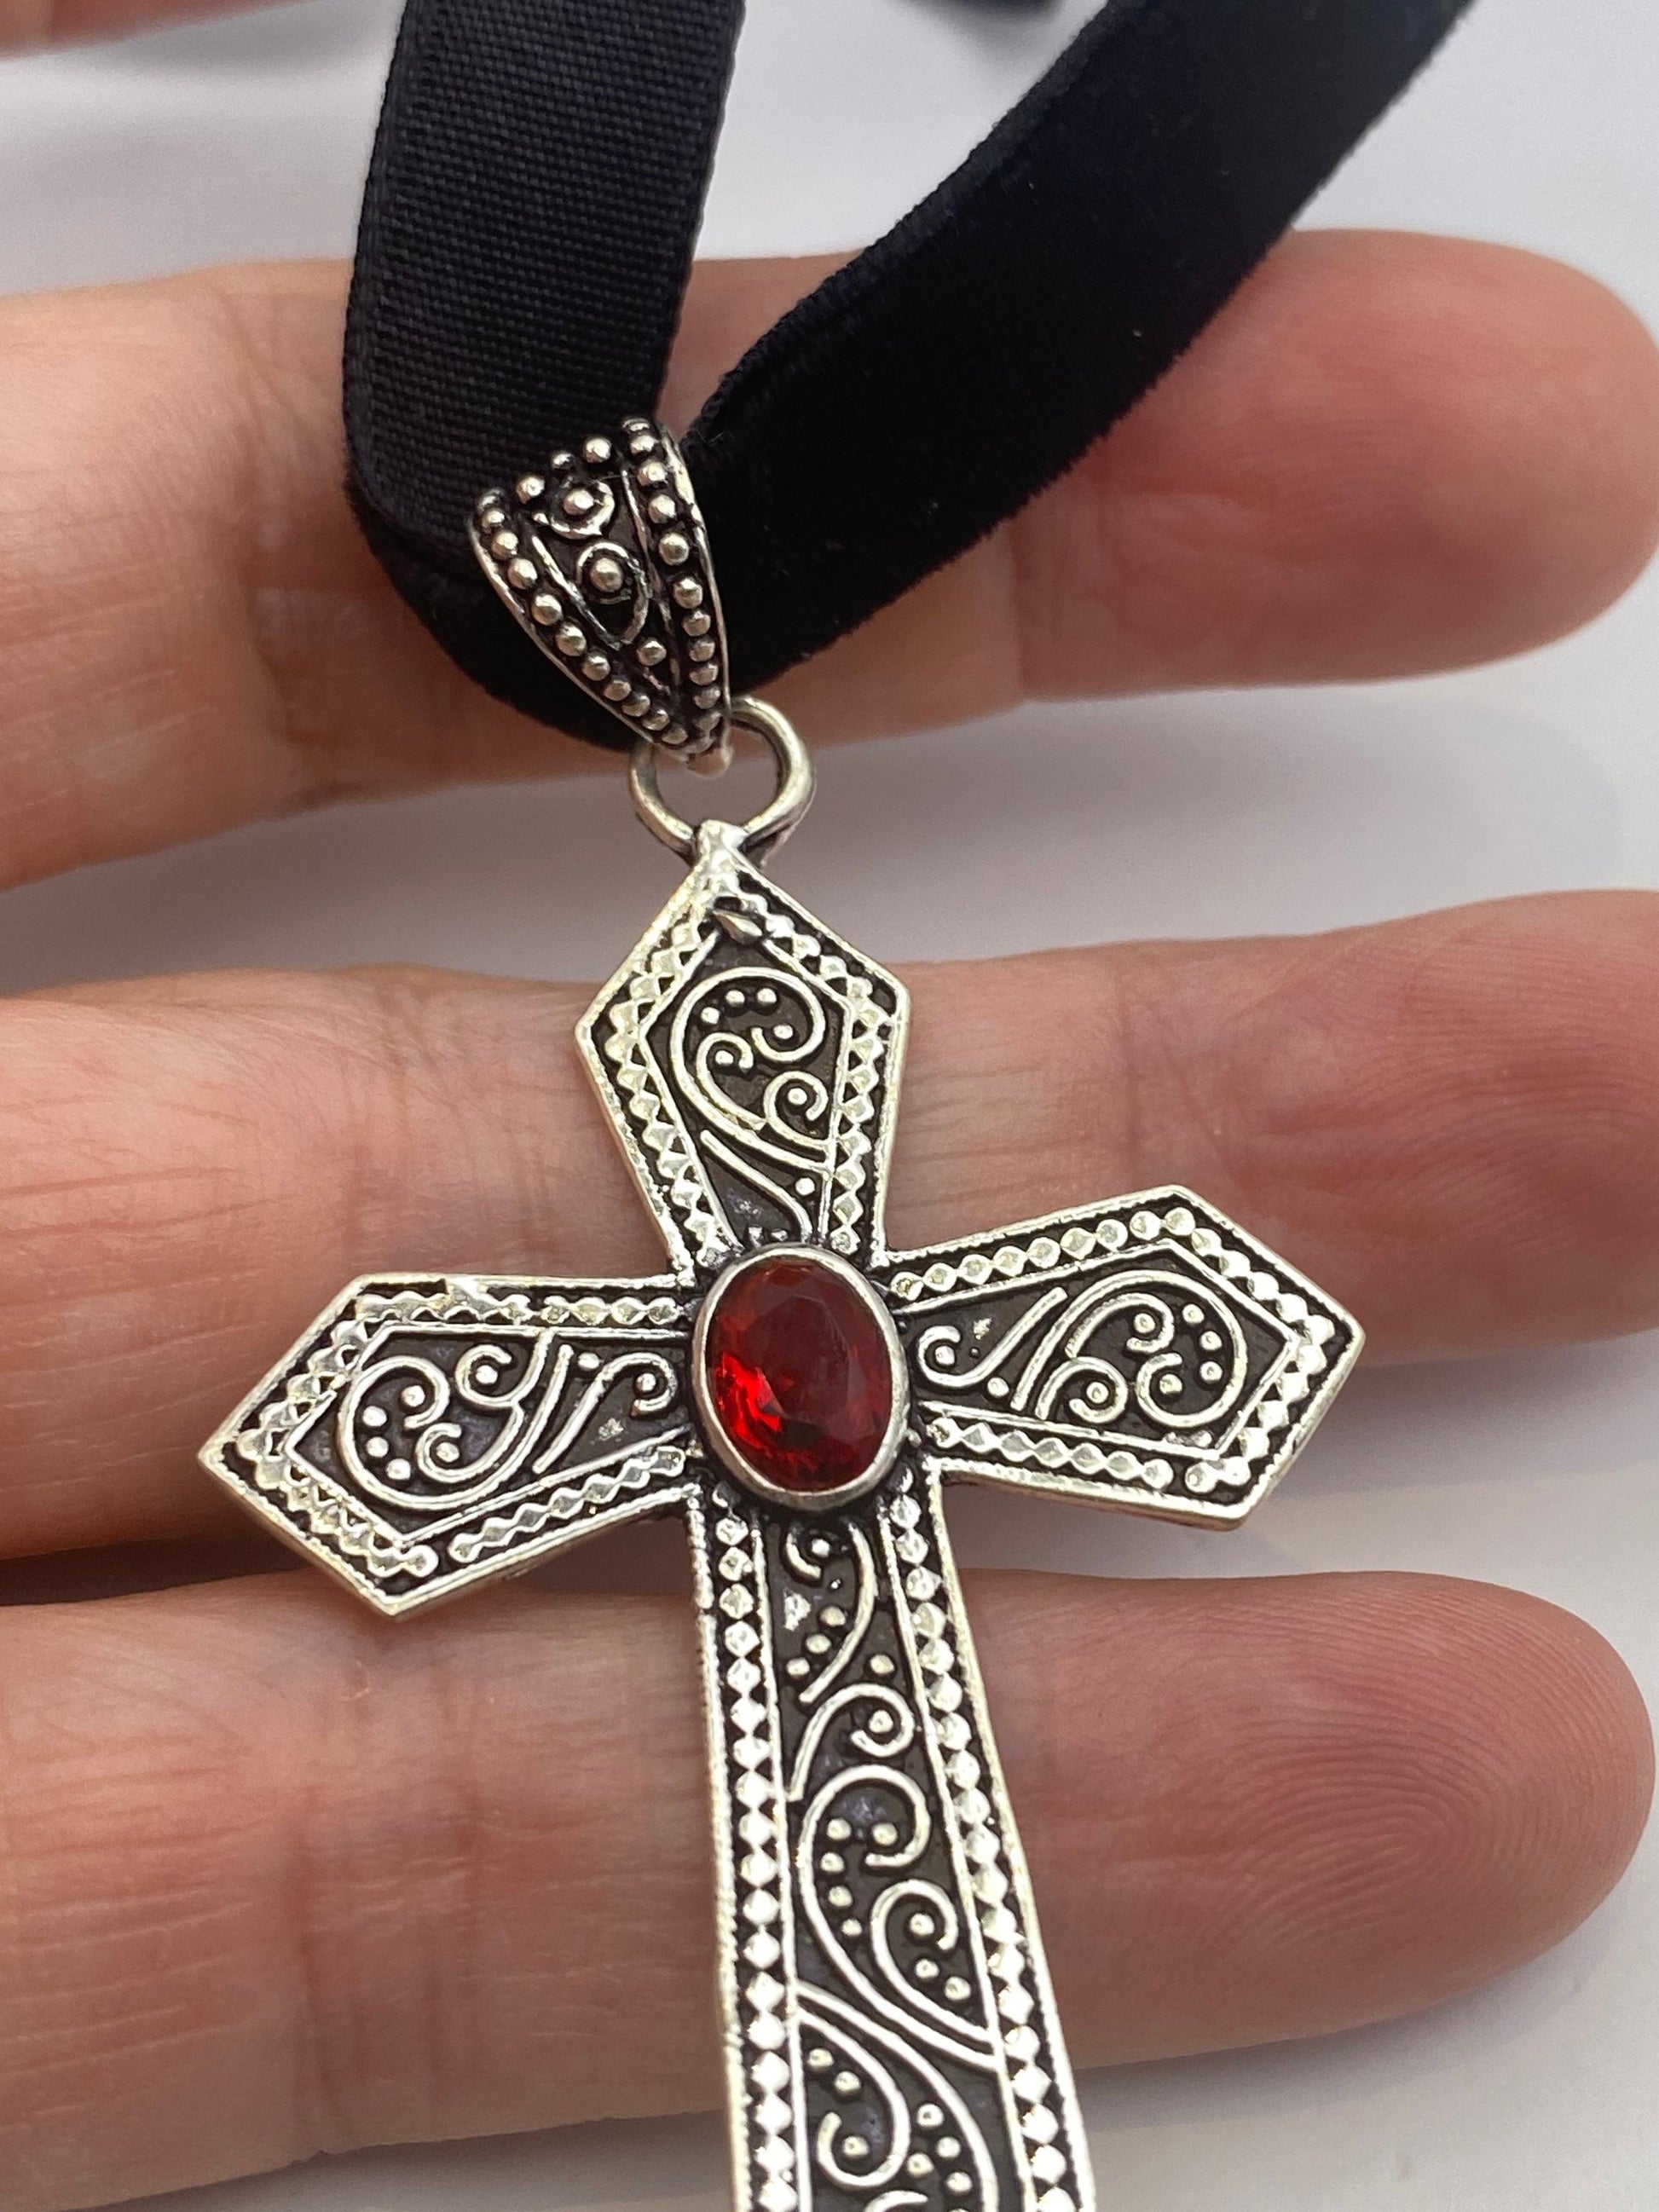 Vintage Red Garnet Glass Bronze Silver Cross Pendant